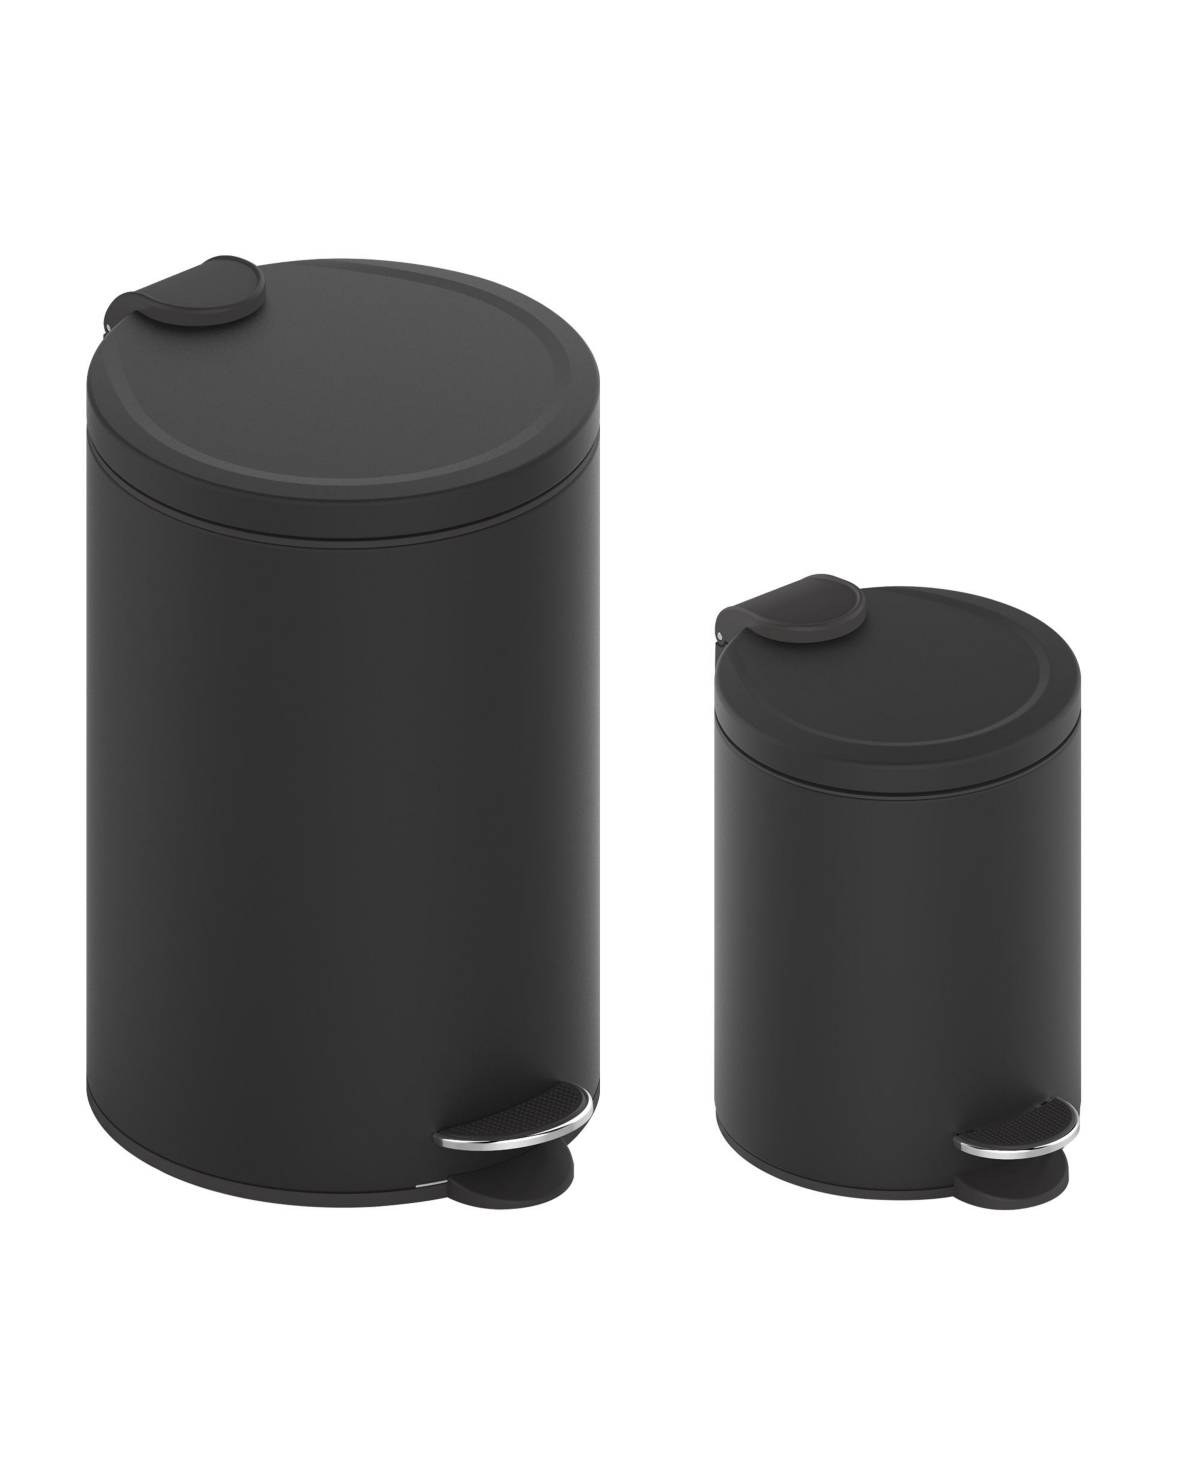 3.2 Gal./12-Liter and 0.8 Gal./3 Liter Stylish Round Metal Step-on Trash Can Set - Black